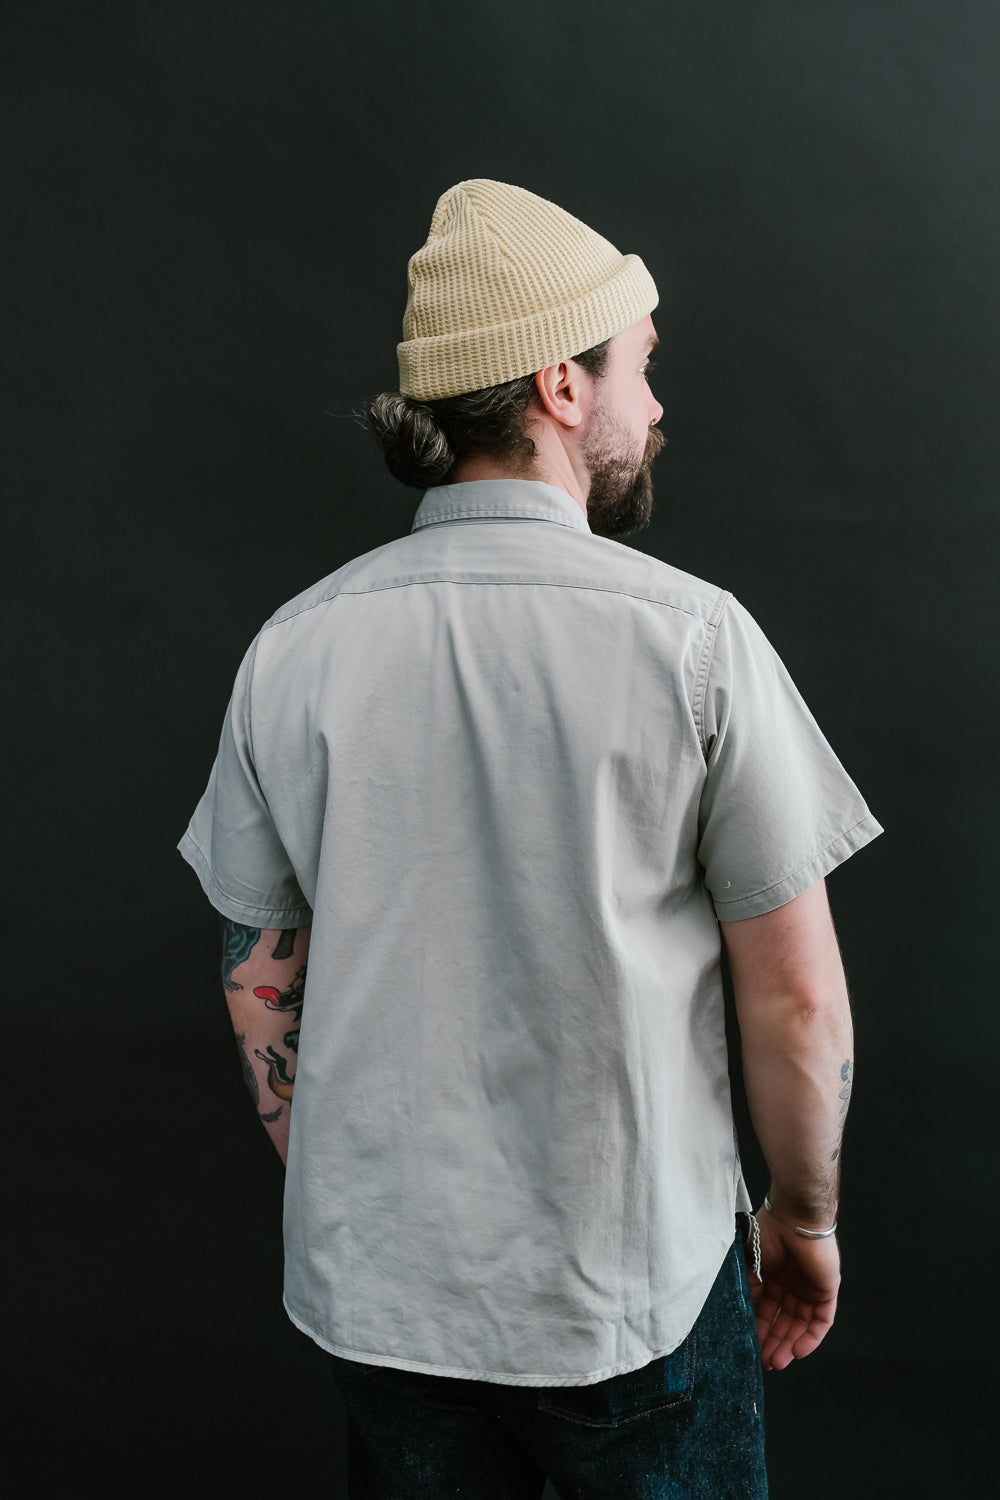 01-8069-71 - 1960s Twill Work Shirt - Light Grey